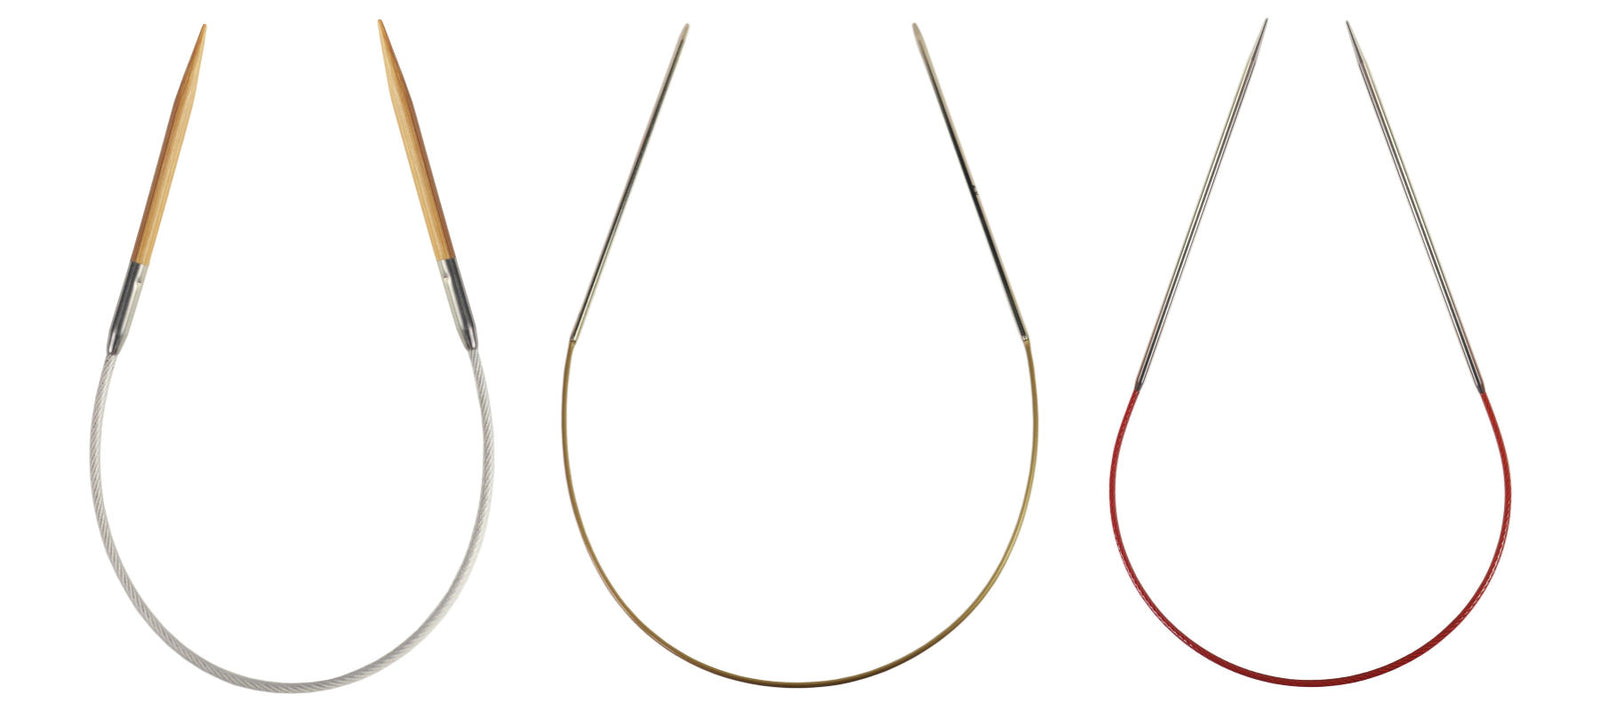 Choosing Your Knitting Needle: Circular vs. Straight